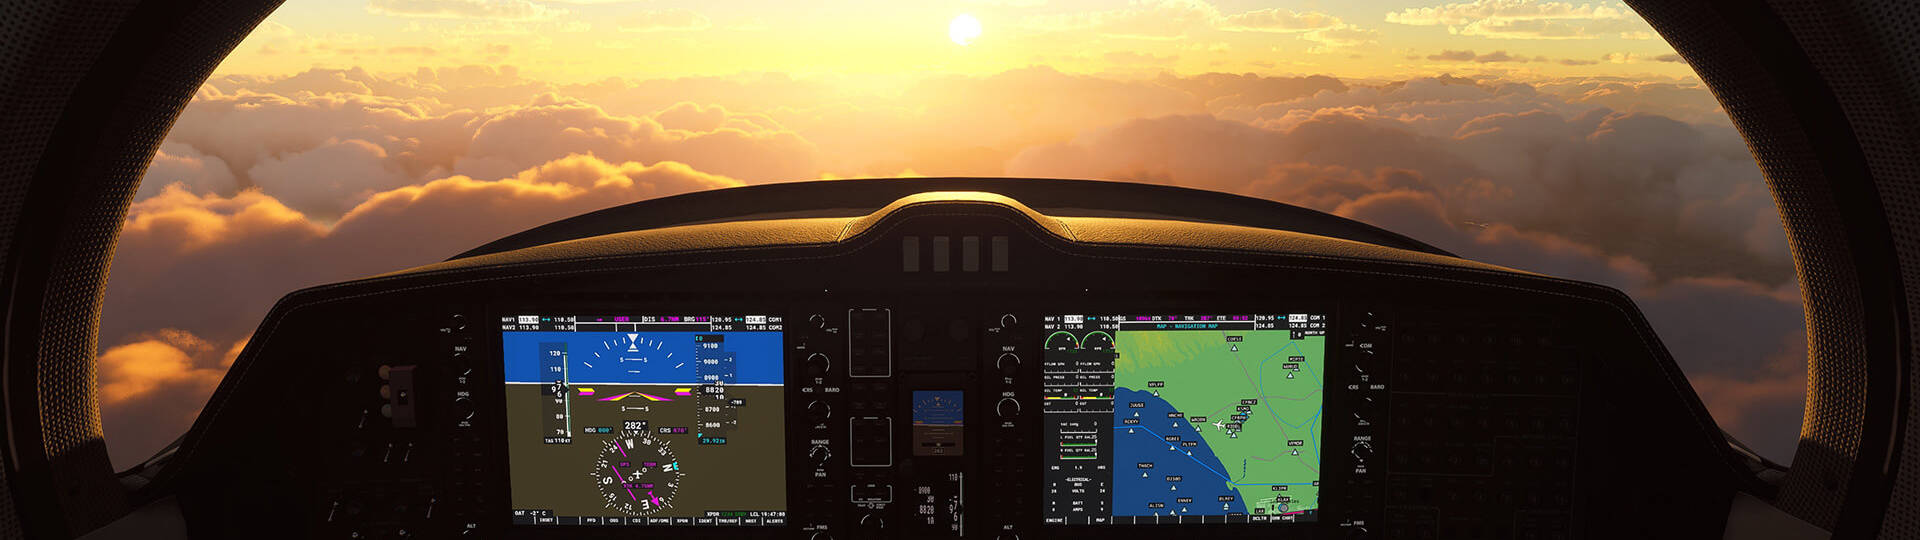 Microsoft Flight Simulator 2020 Update 3 slice